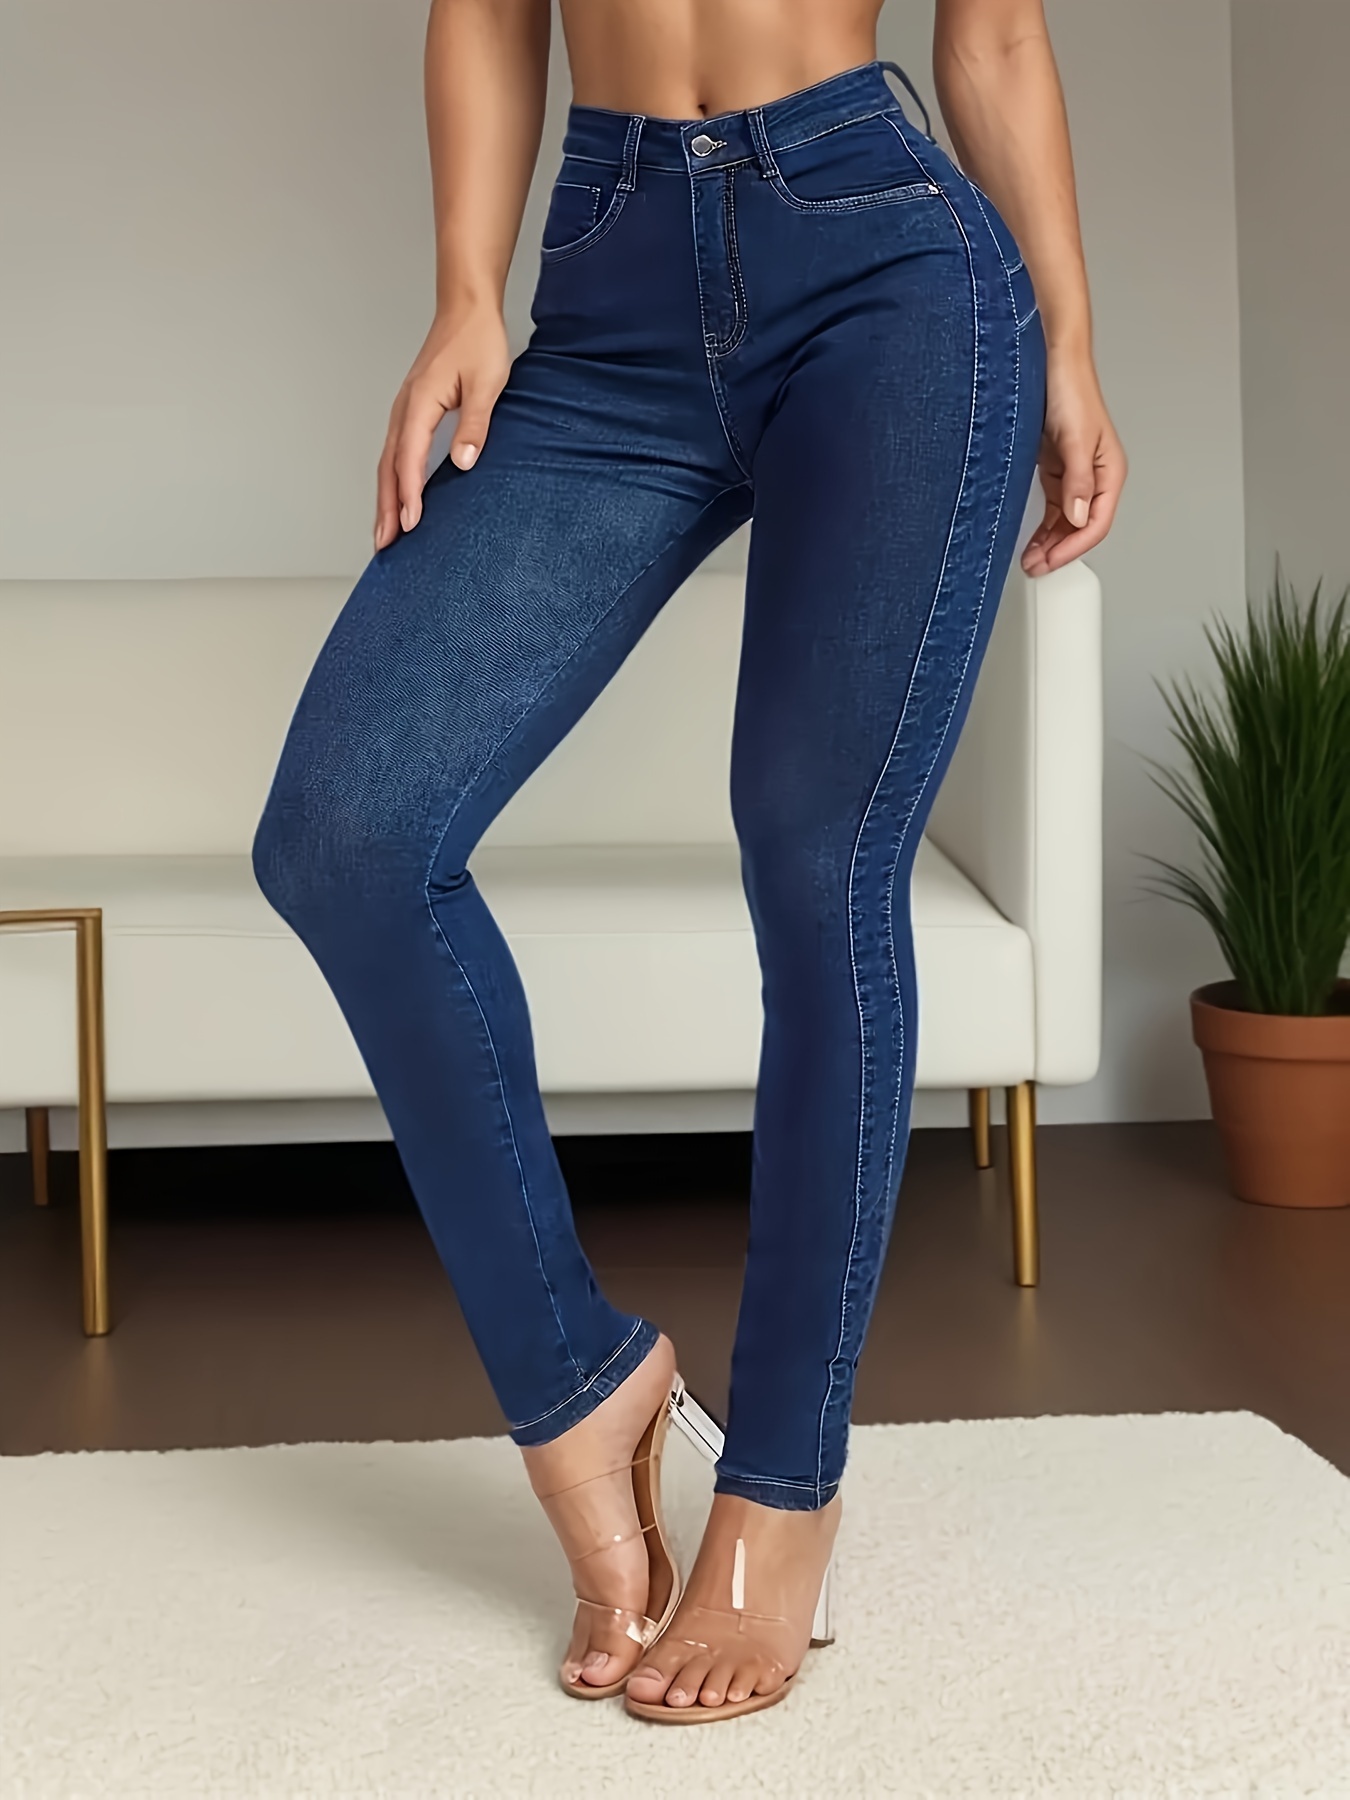 High Waist Elastic Skinny Jeans, Butt-lifting Slim Fitted Denim Pants,  Women's Denim Jeans & Clothing